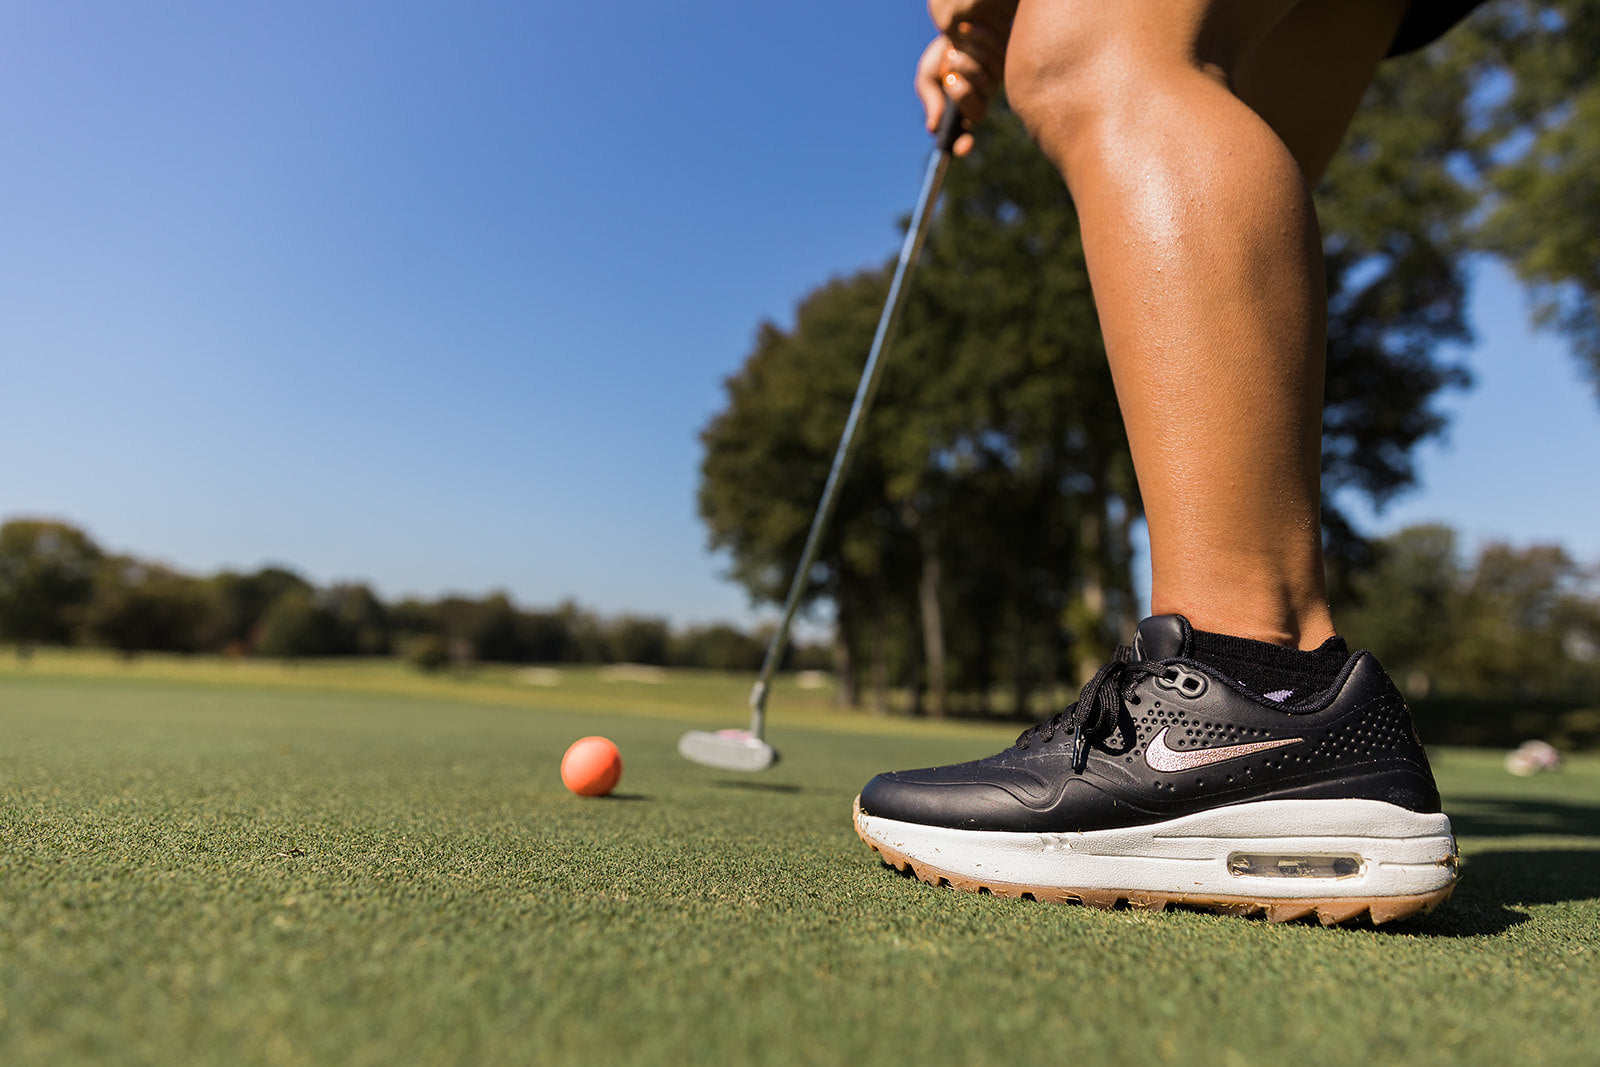 Why Performance Socks for Golf?